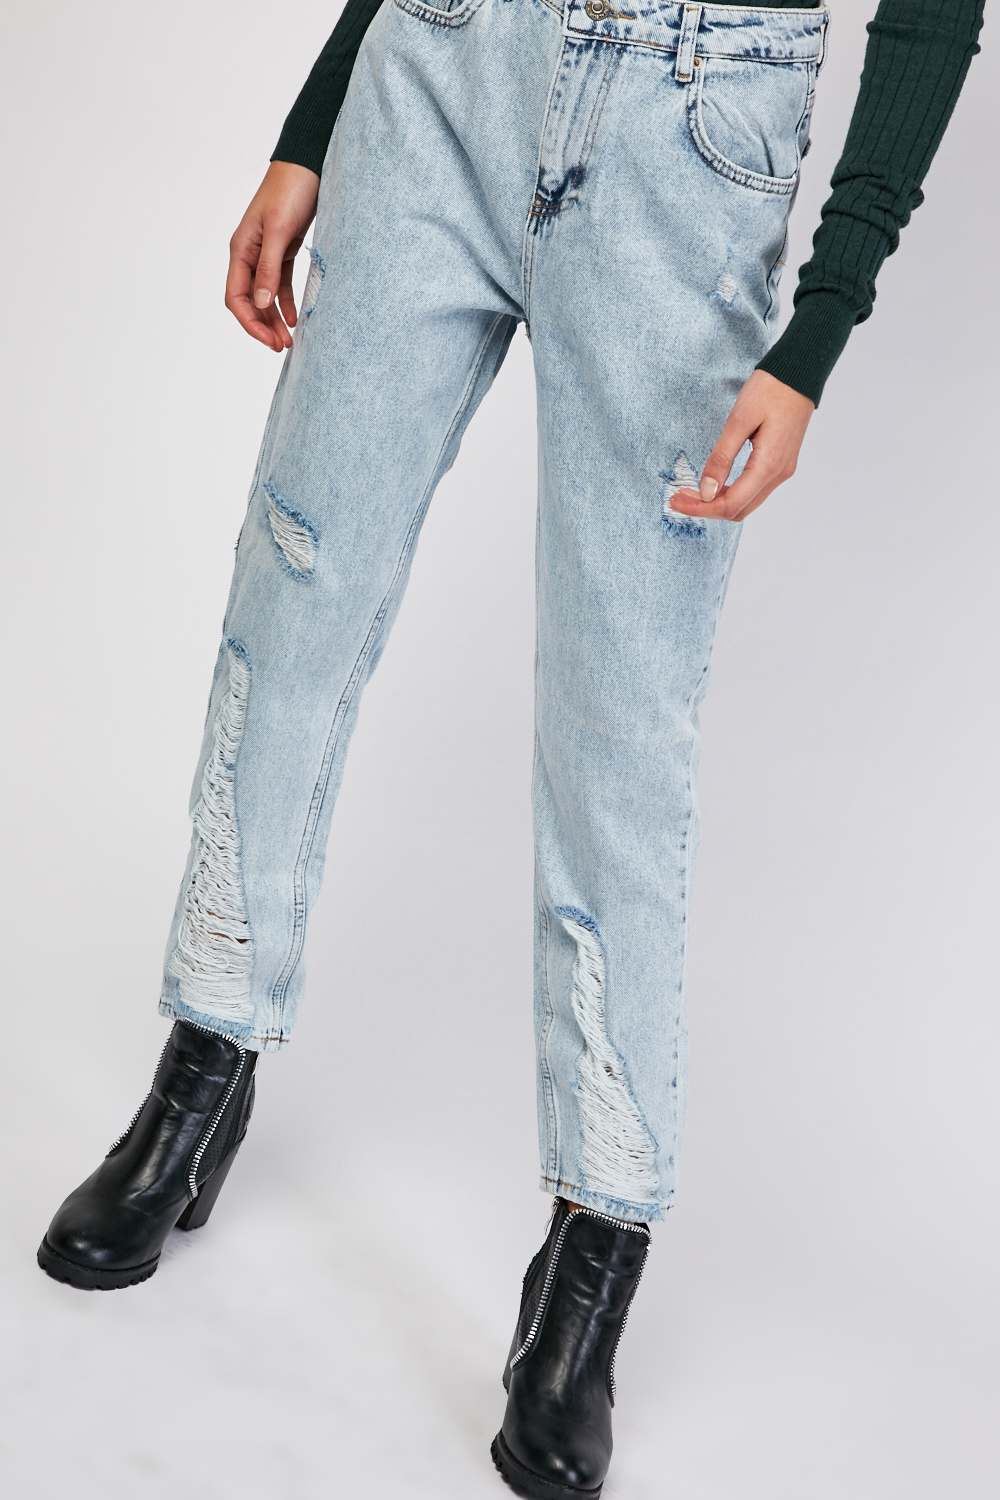 Distressed Light Blue Mom Jeans - Just $7